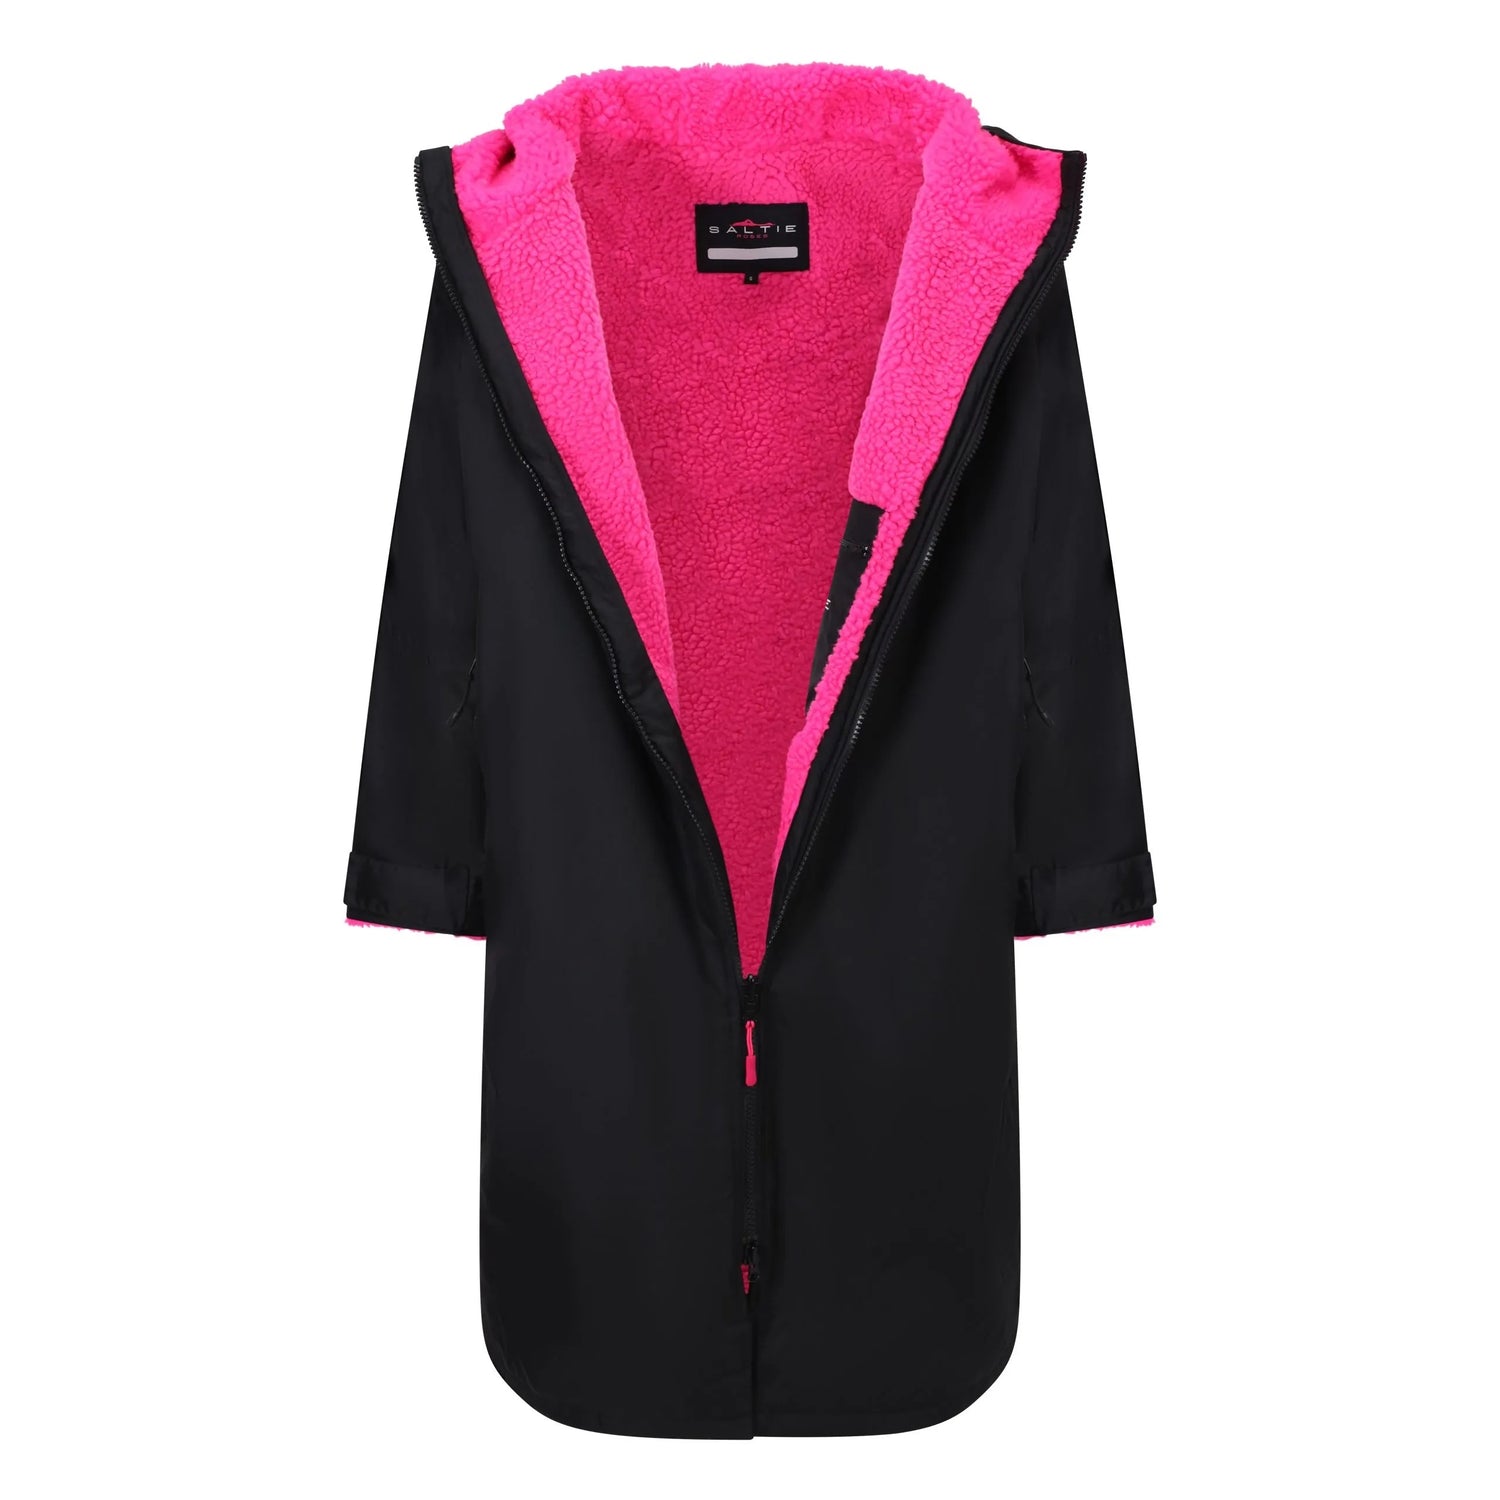 Saltie Elite Changing Robe - Black/Hot Pink